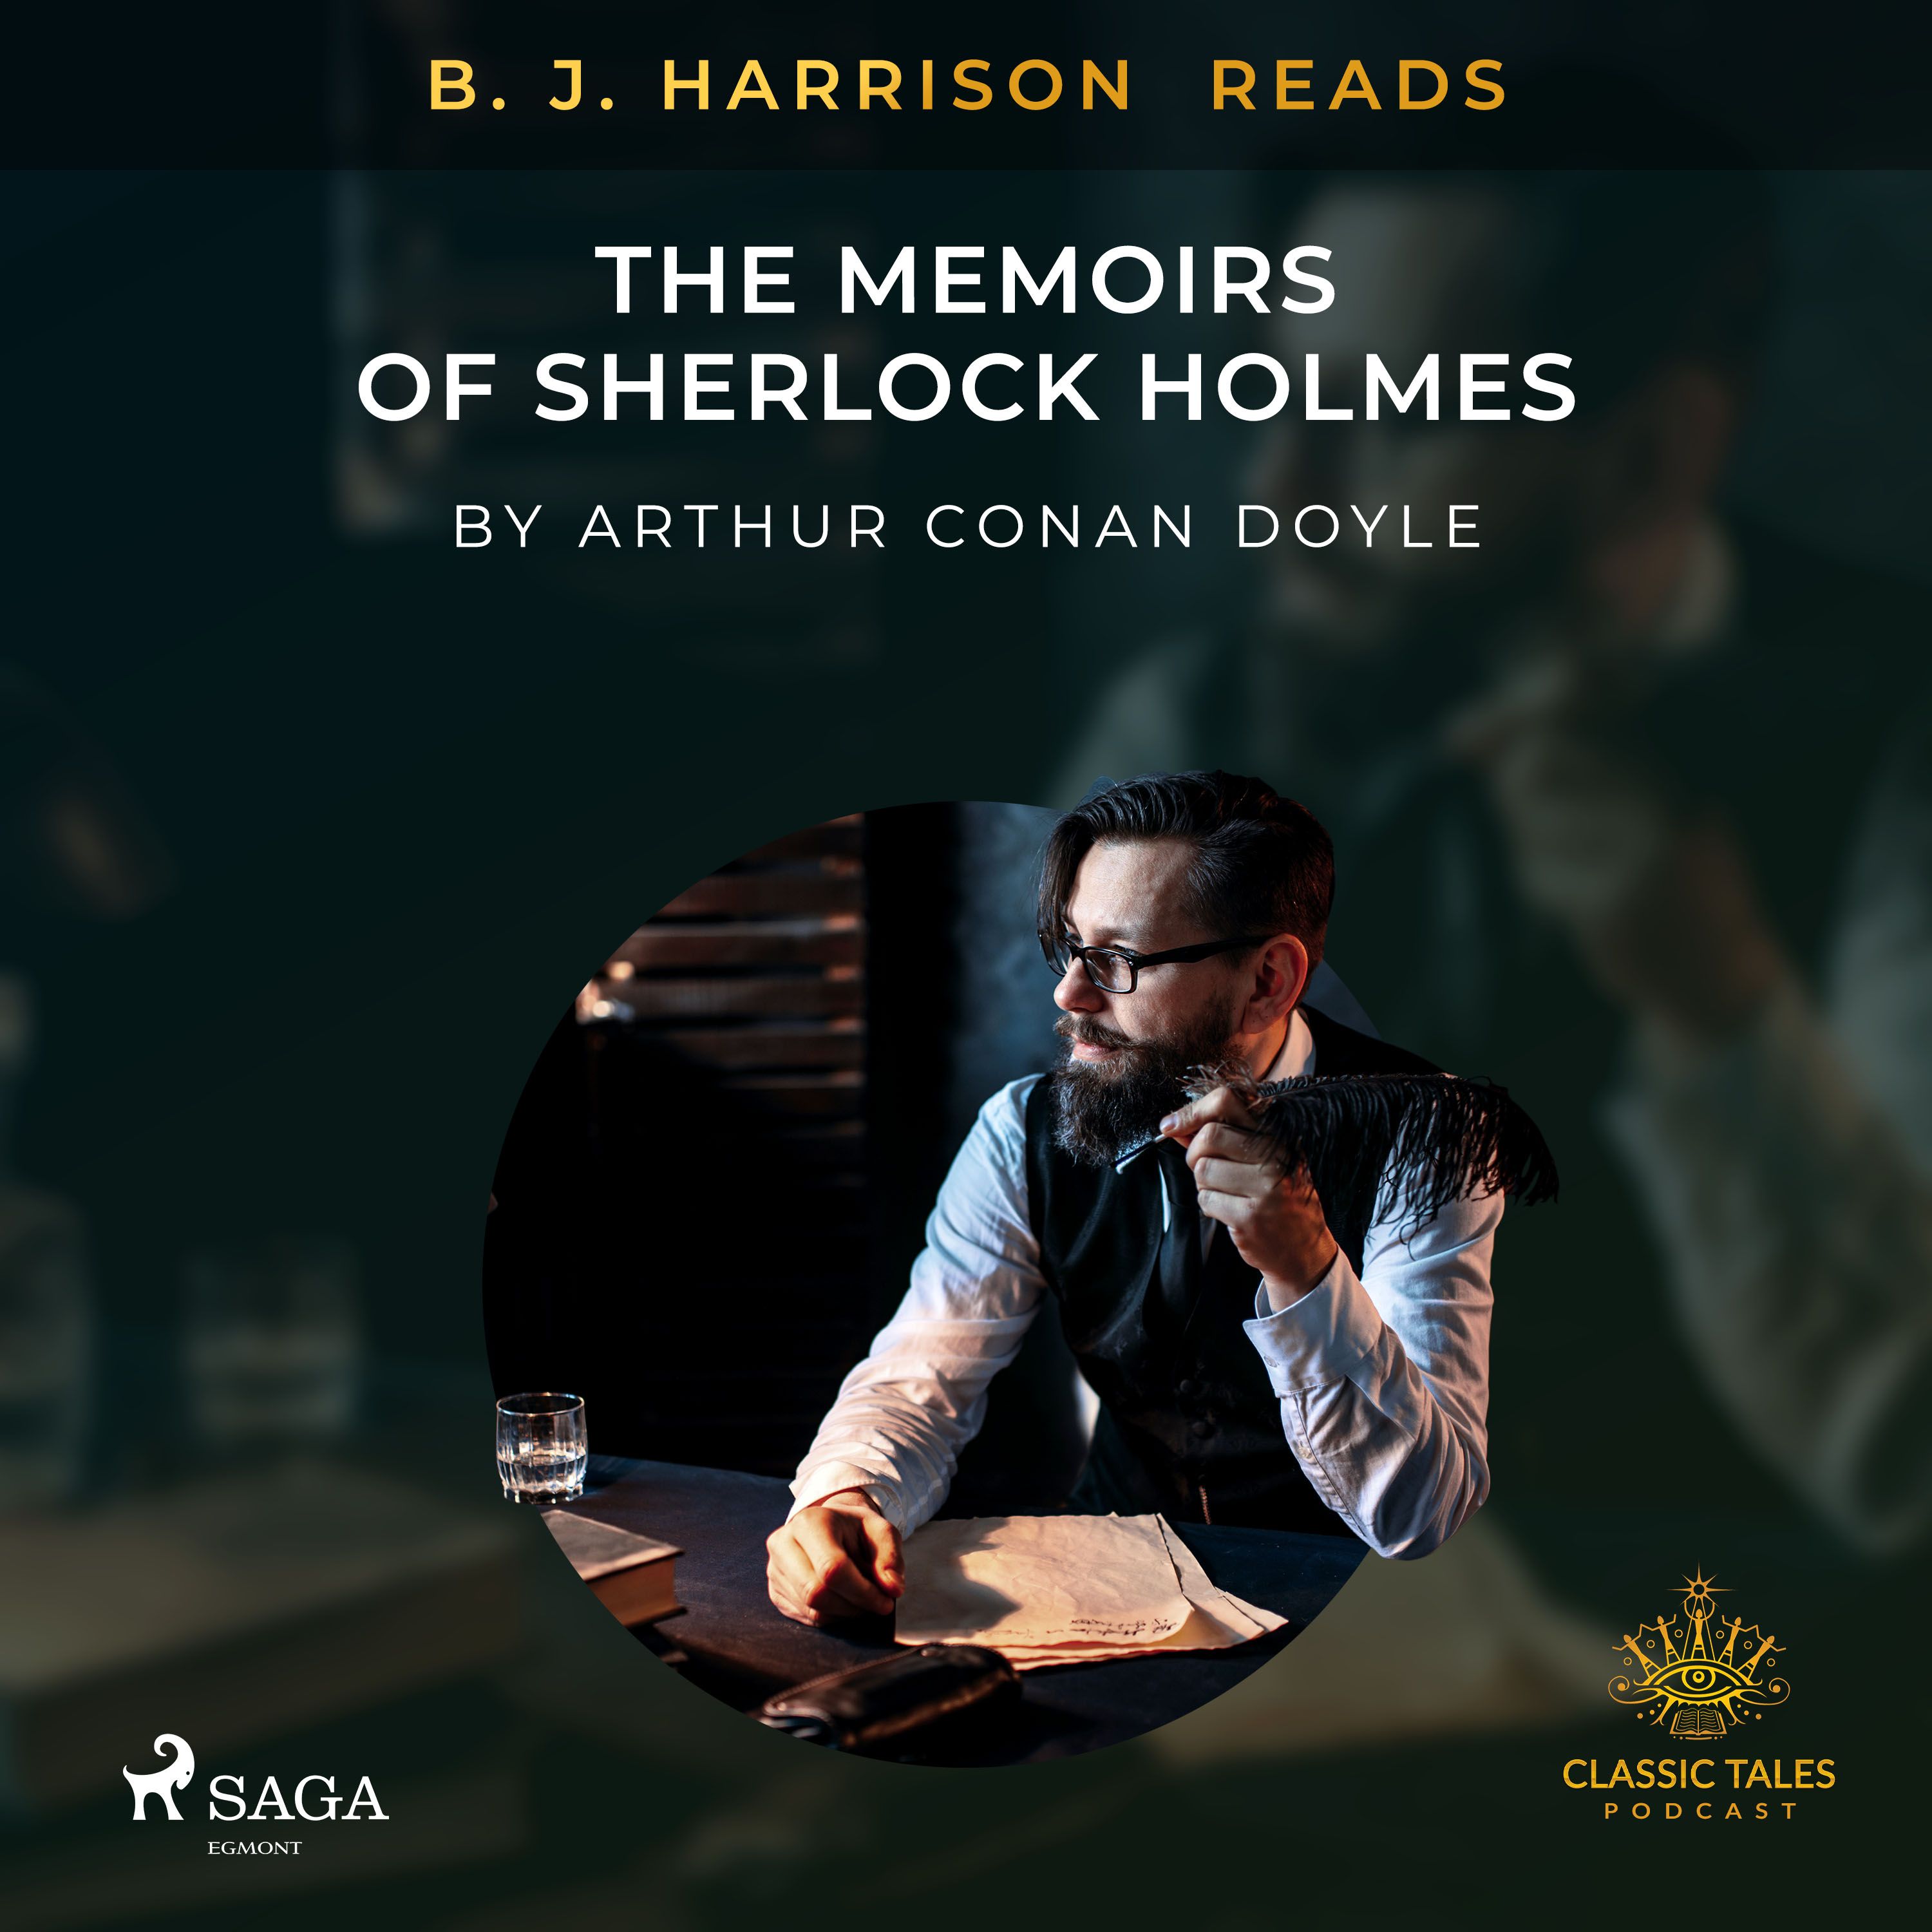 B. J. Harrison Reads The Memoirs of Sherlock Holmes, ljudbok av Arthur Conan Doyle